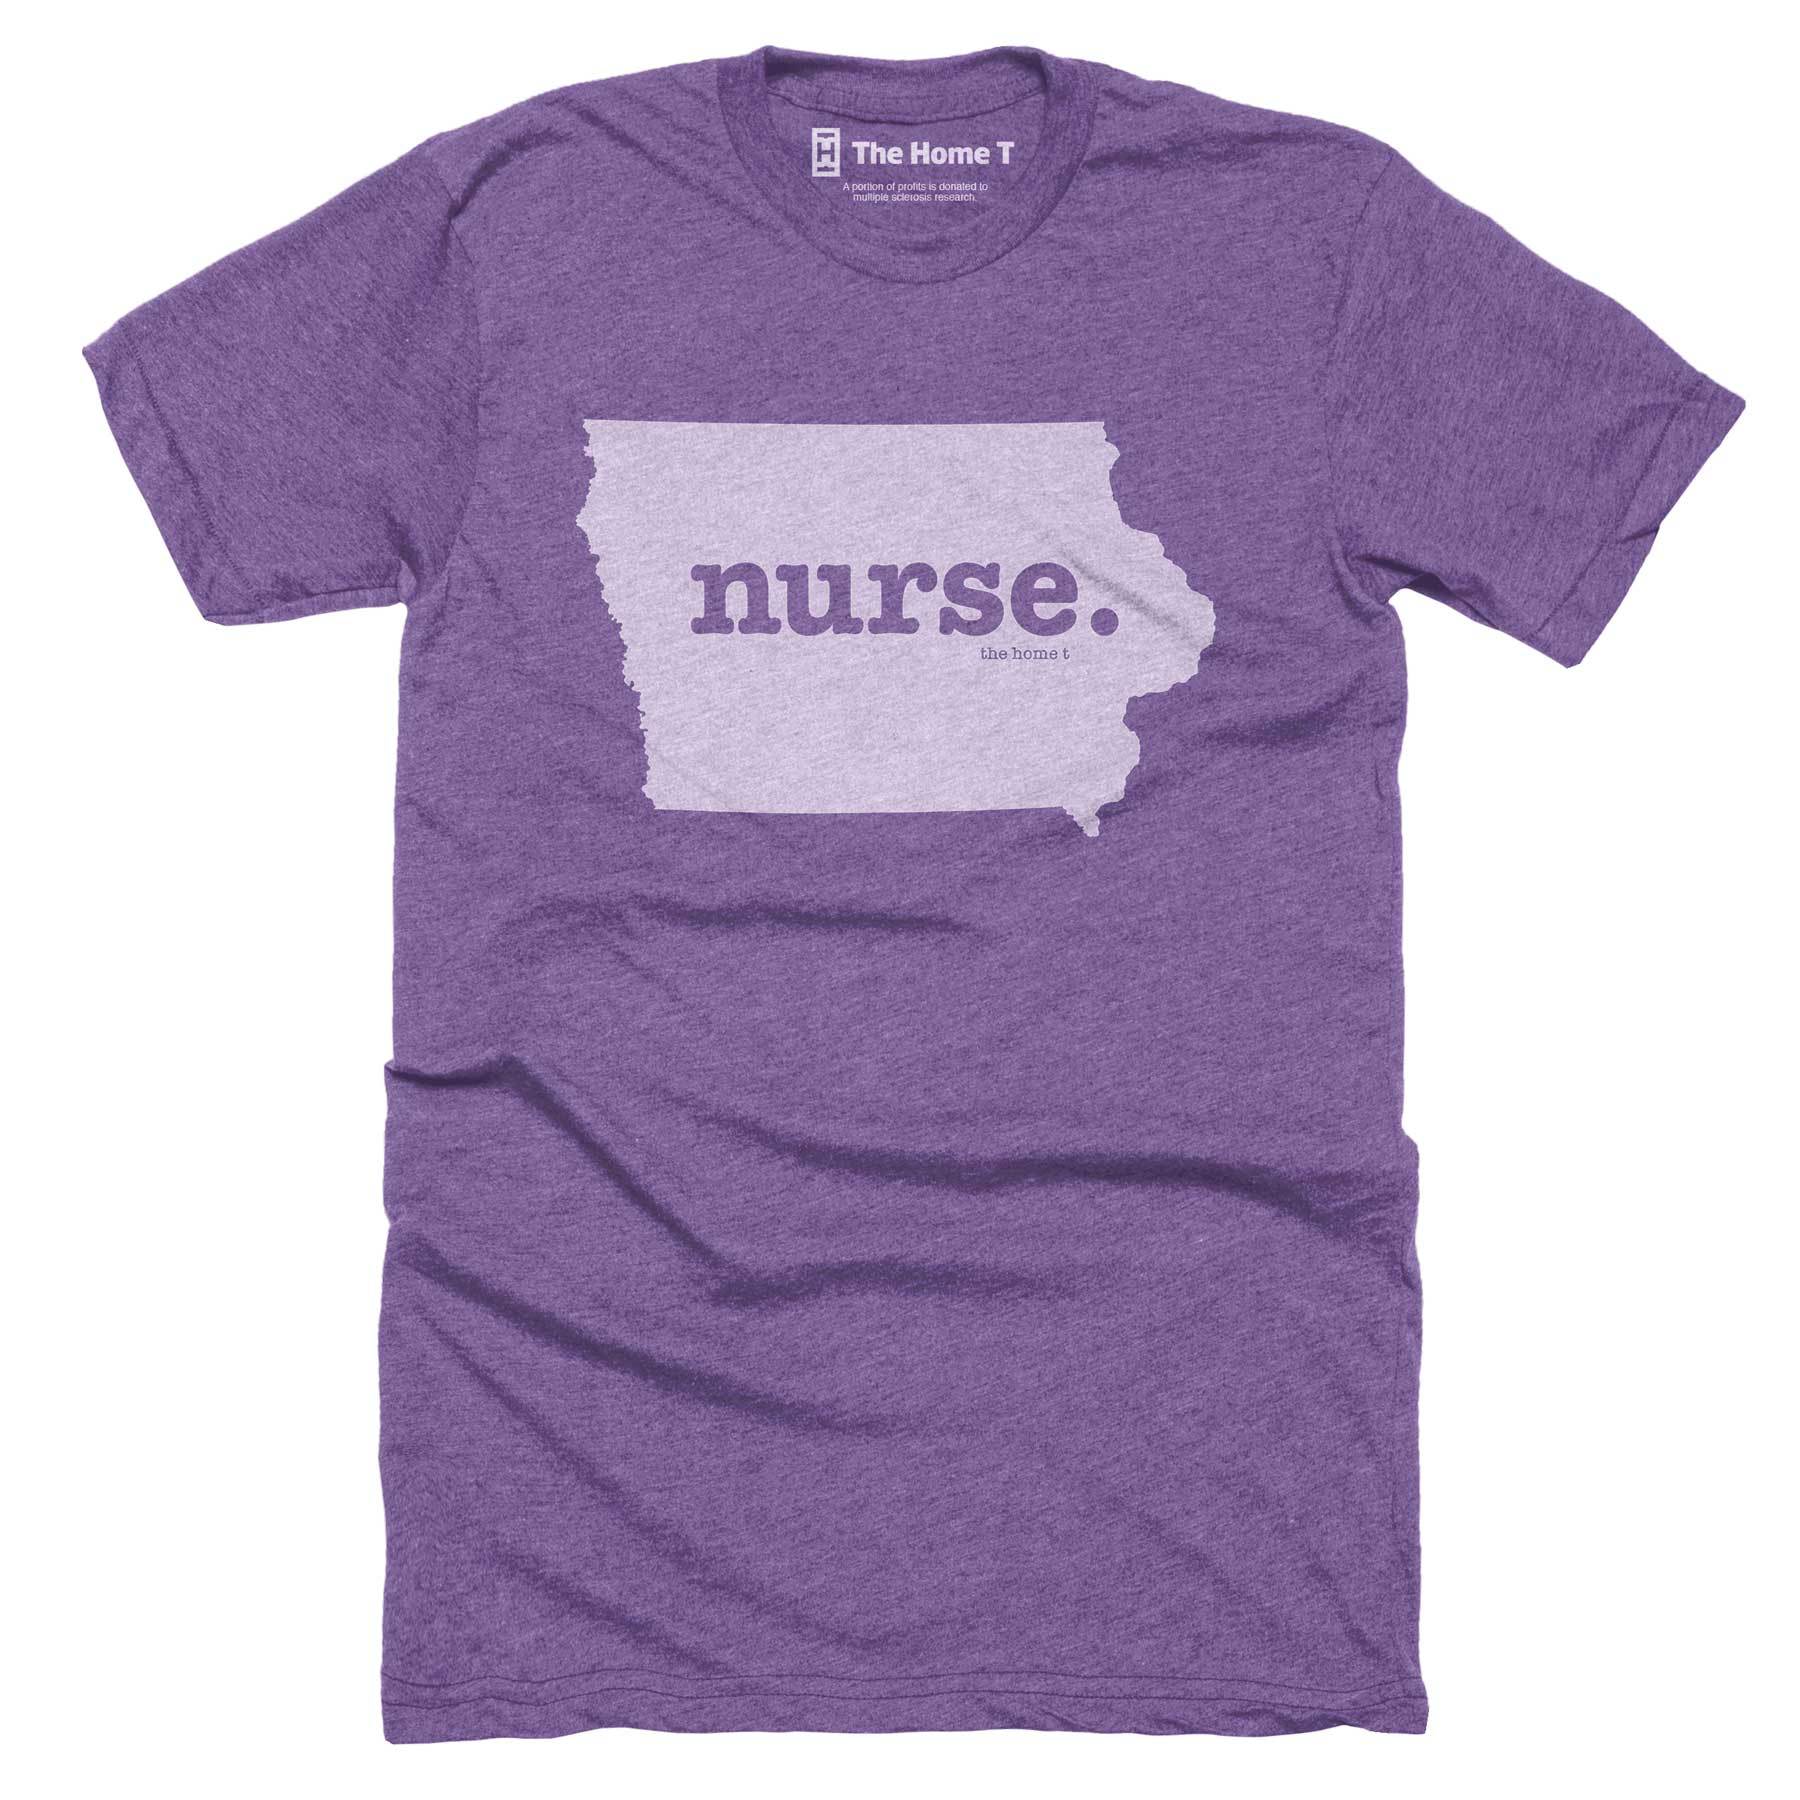 Iowa Nurse Home T-Shirt Occupation The Home T